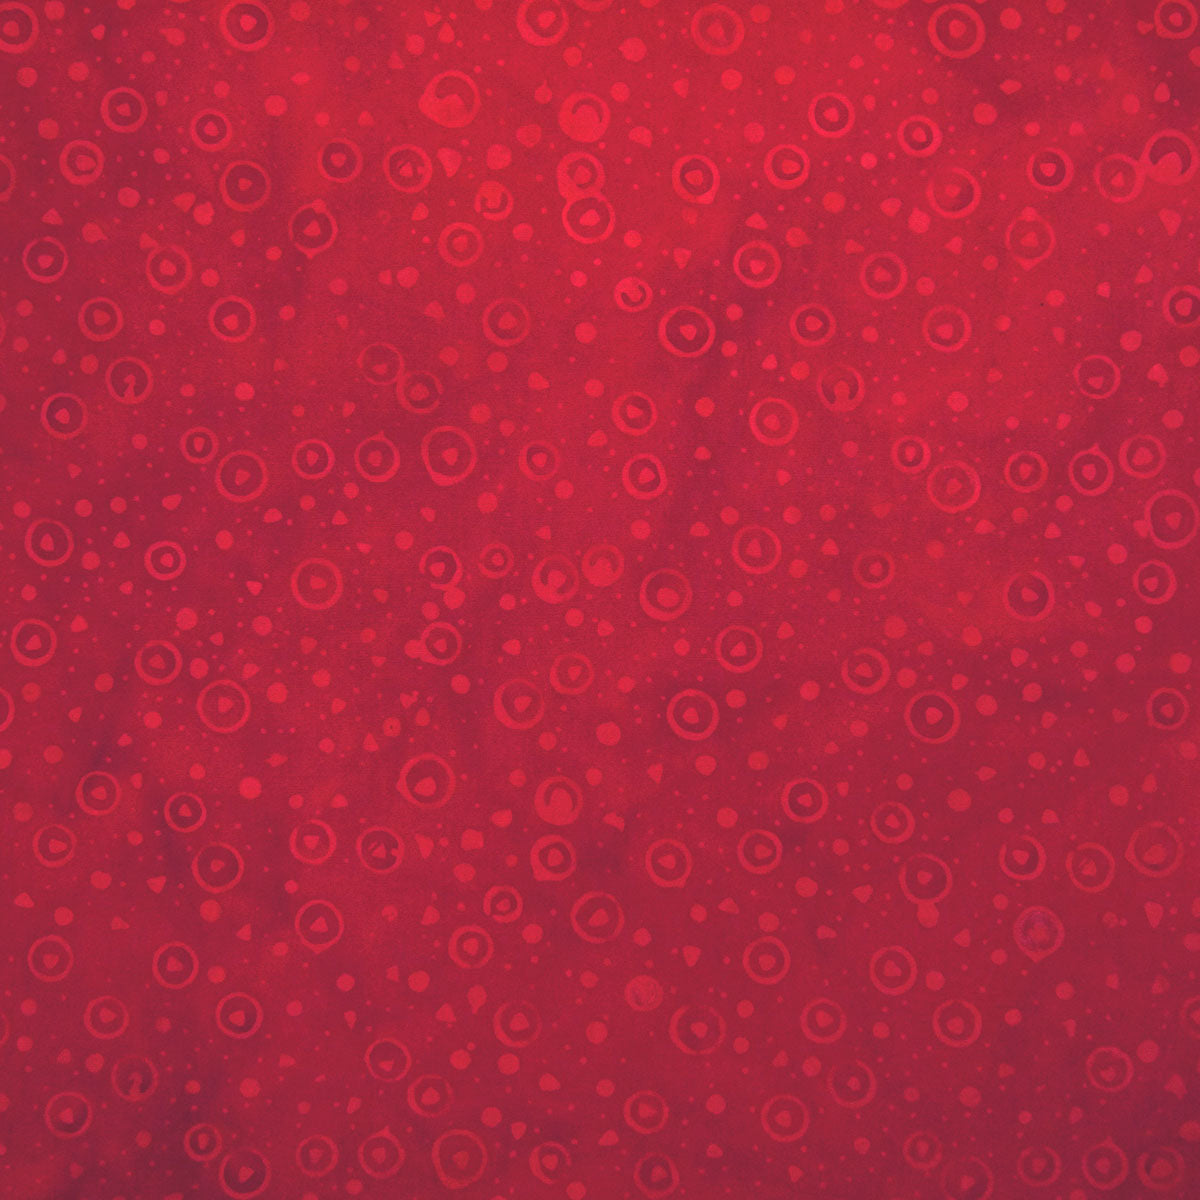 Crema de Langosta : CR-38-6948 Holiday Red : Batik by Mirah